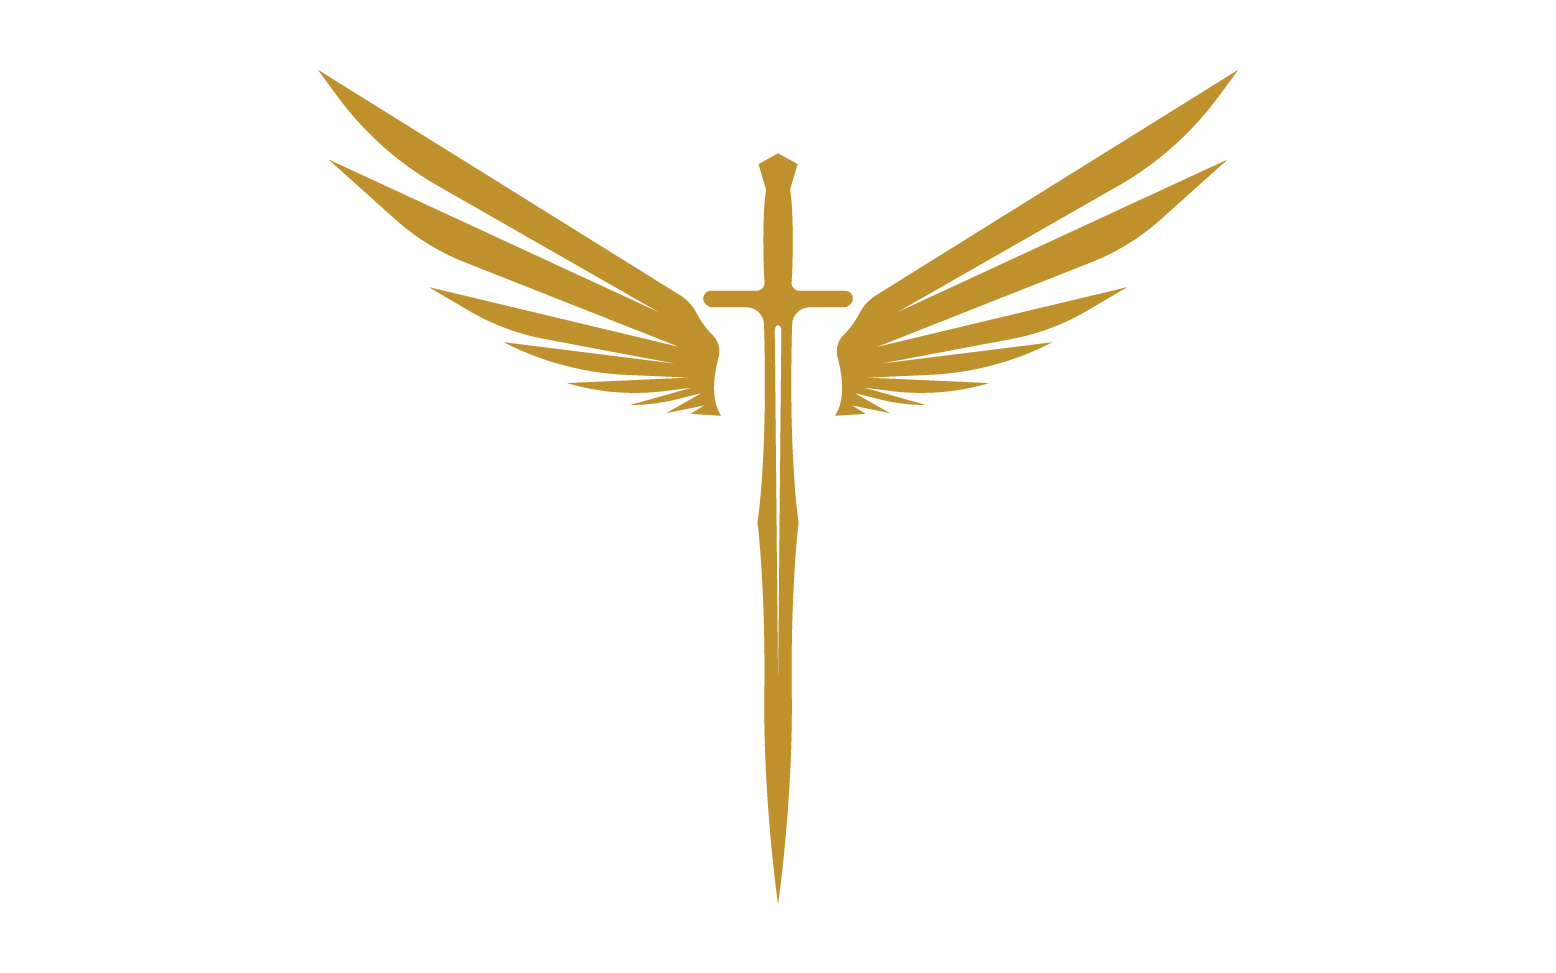 Sword with Wings. Golden Sword Symbol v15